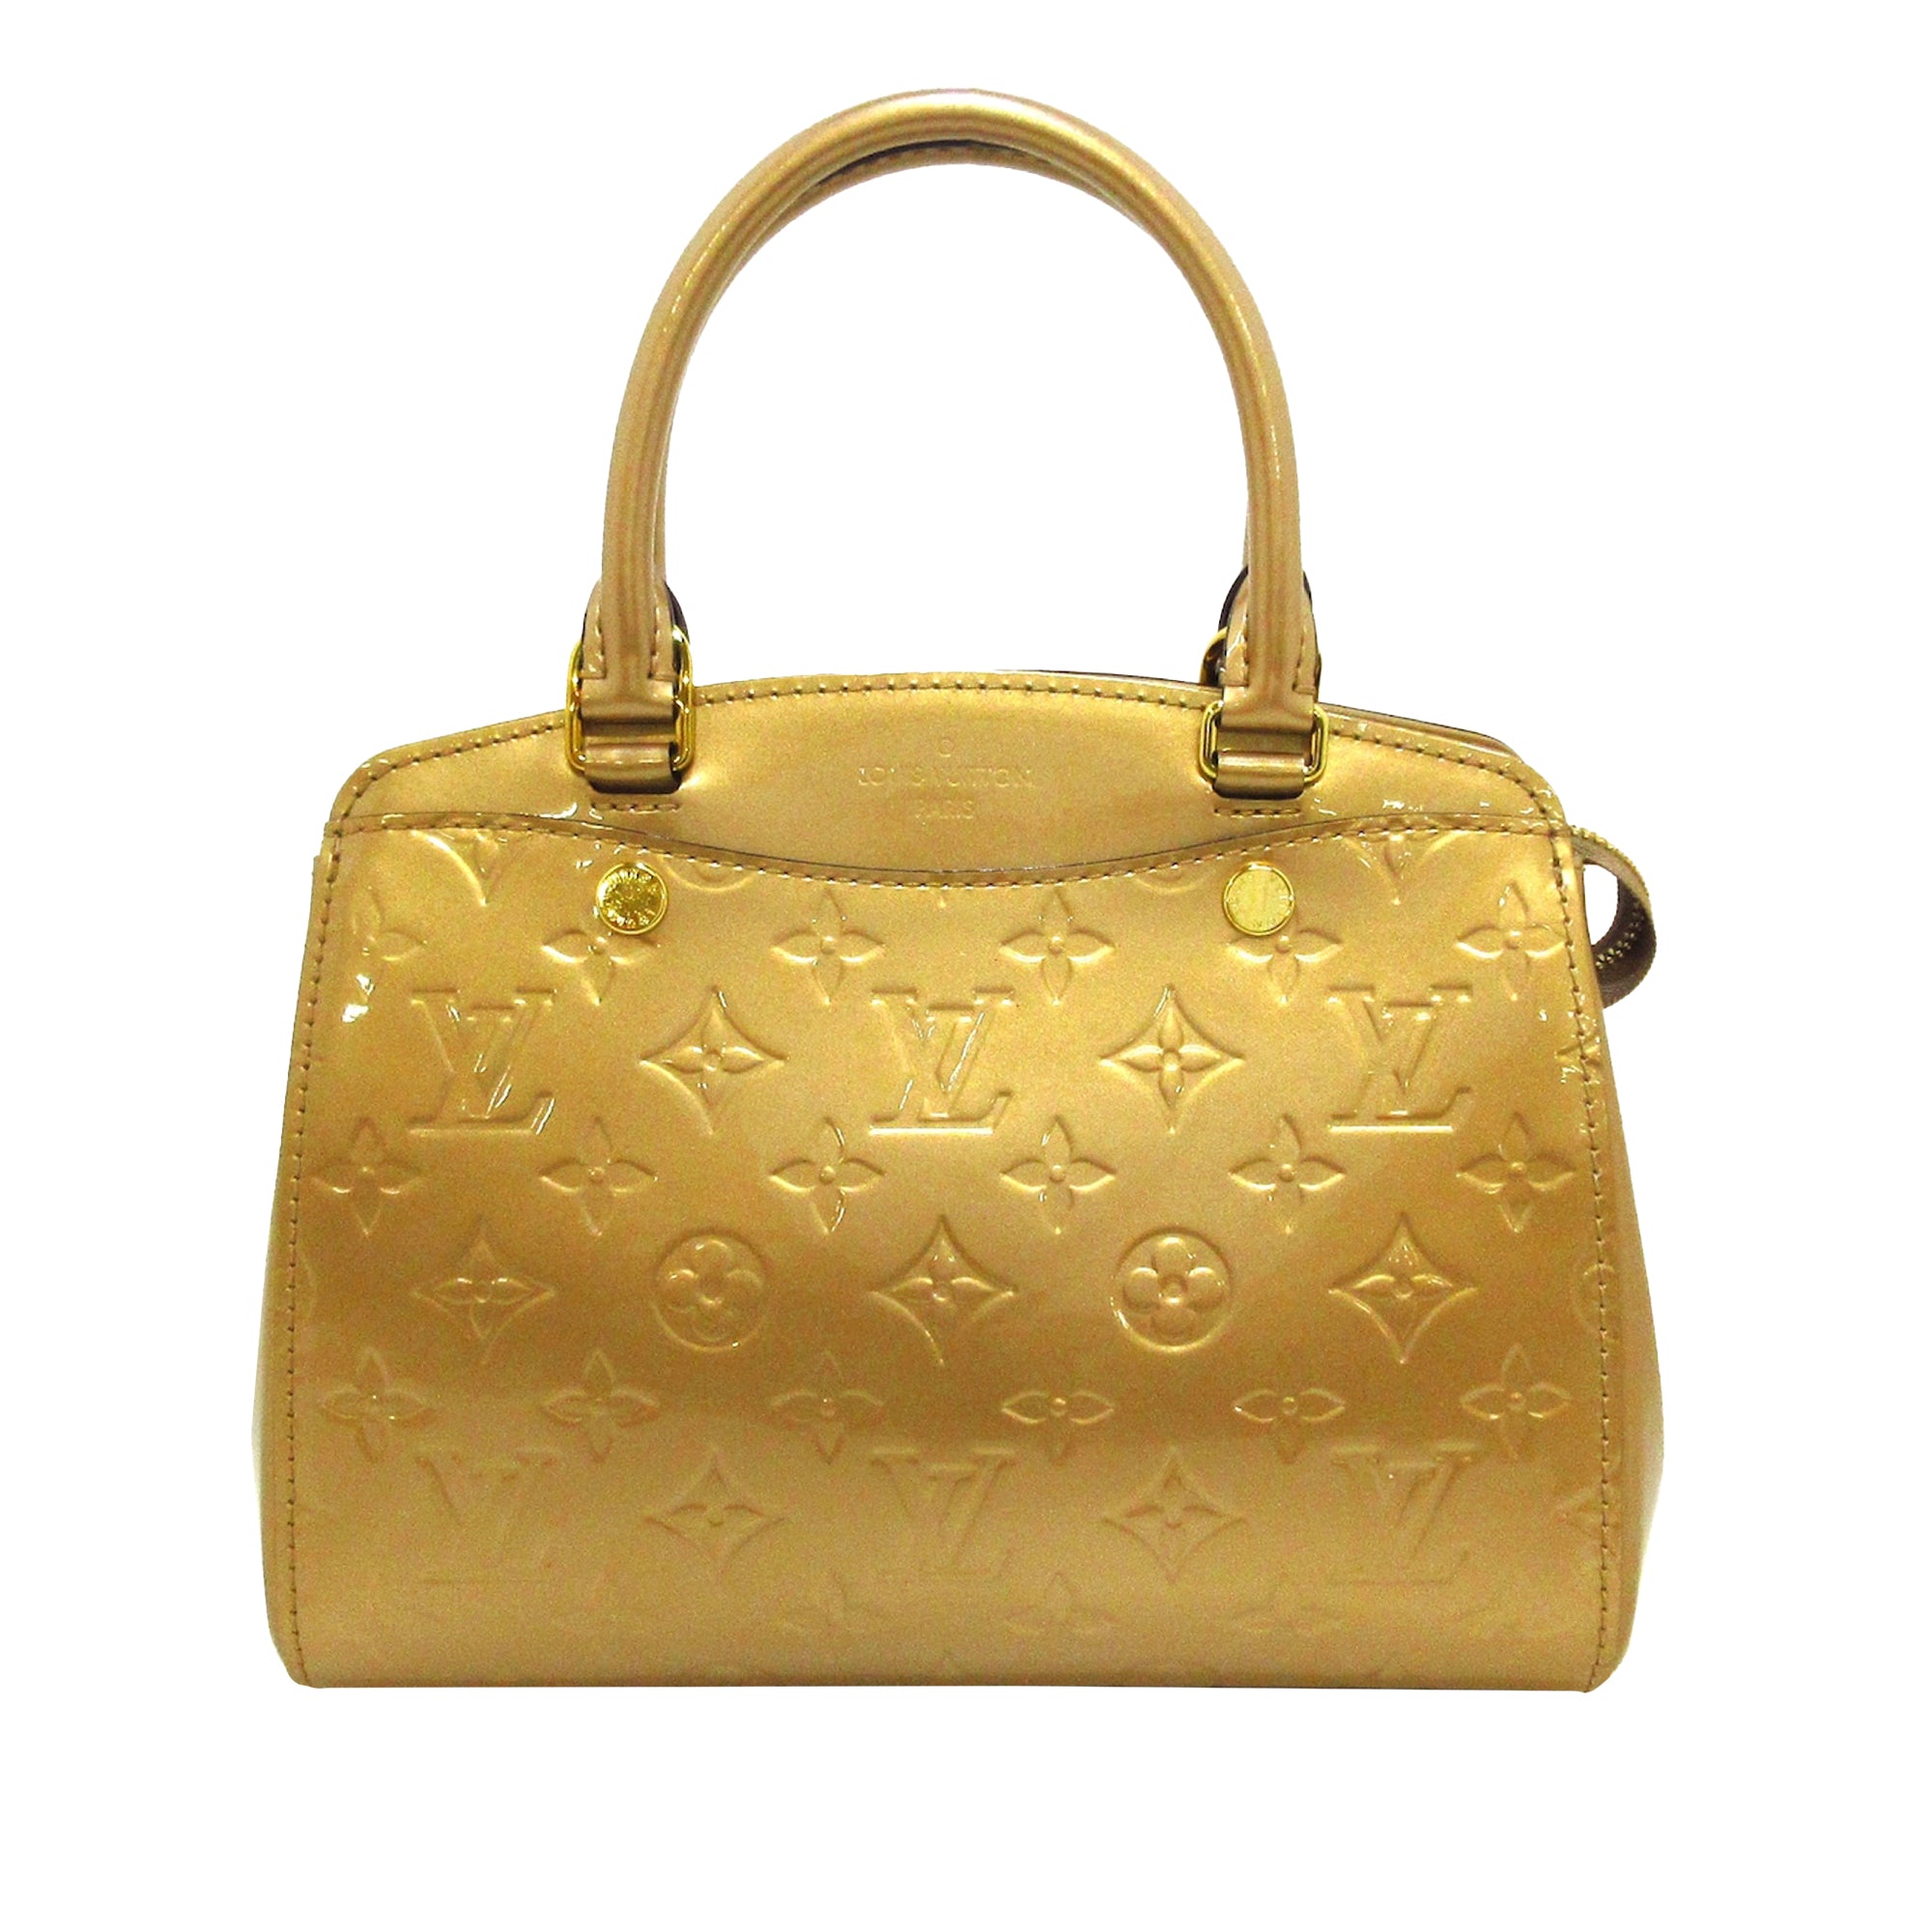 Louis Vuitton Vernis Monogram Tote in Gold | MTYCI